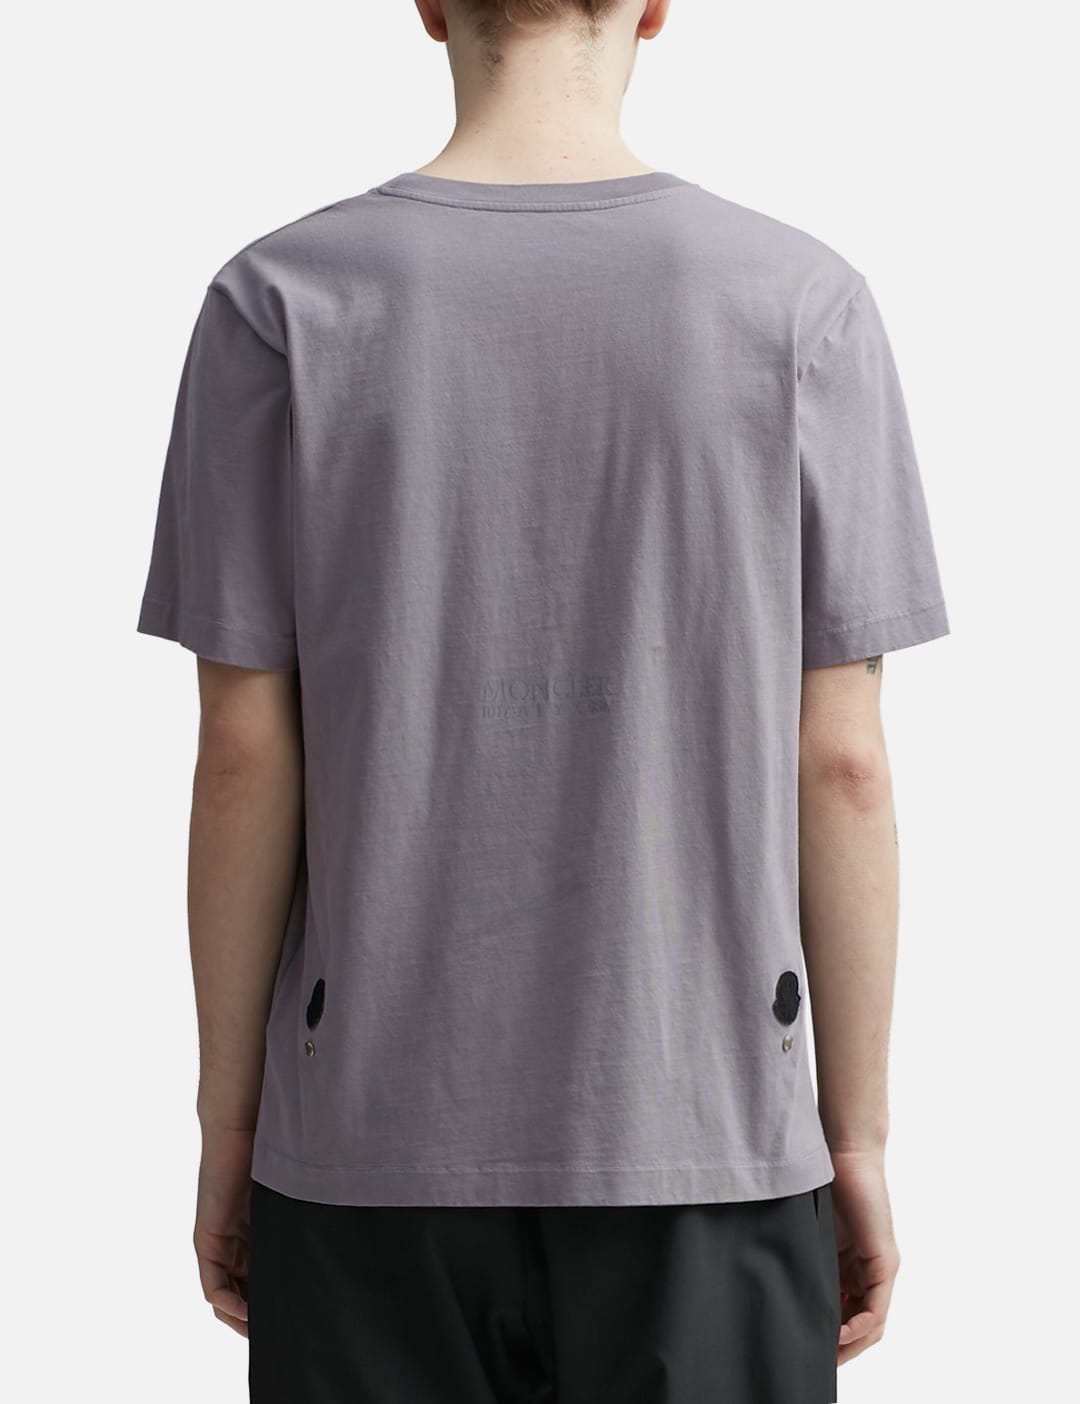 Moncler Genius - モンクレール 6 1017 ALYX 9SM Tシャツ | HBX 